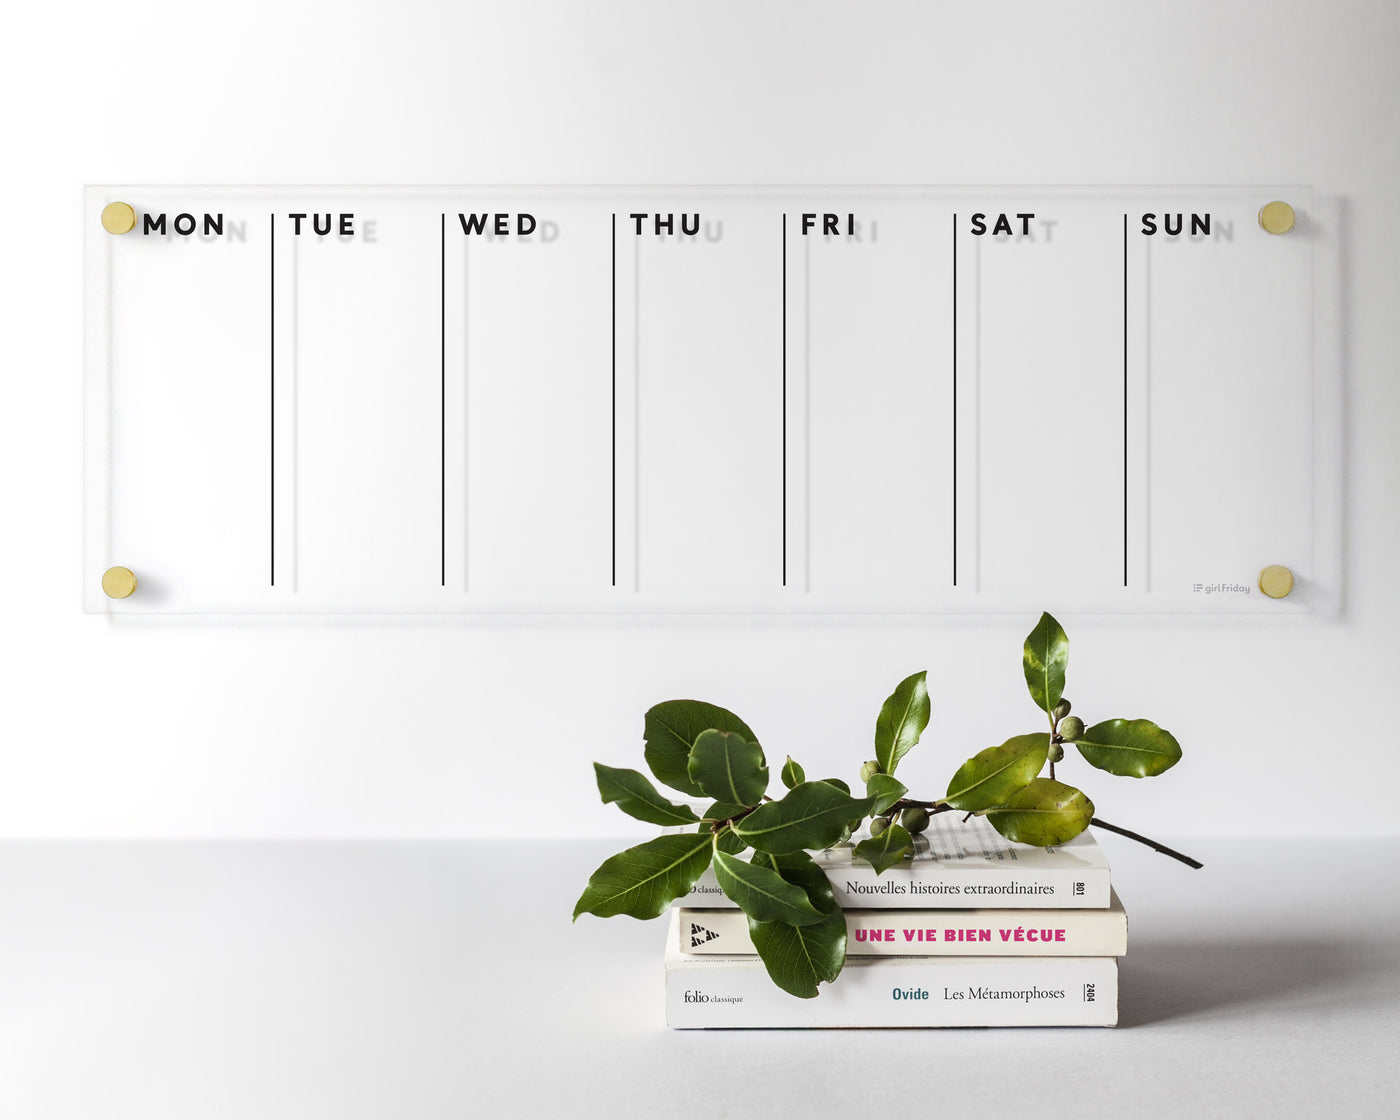 Acrylic Calendar - weekly